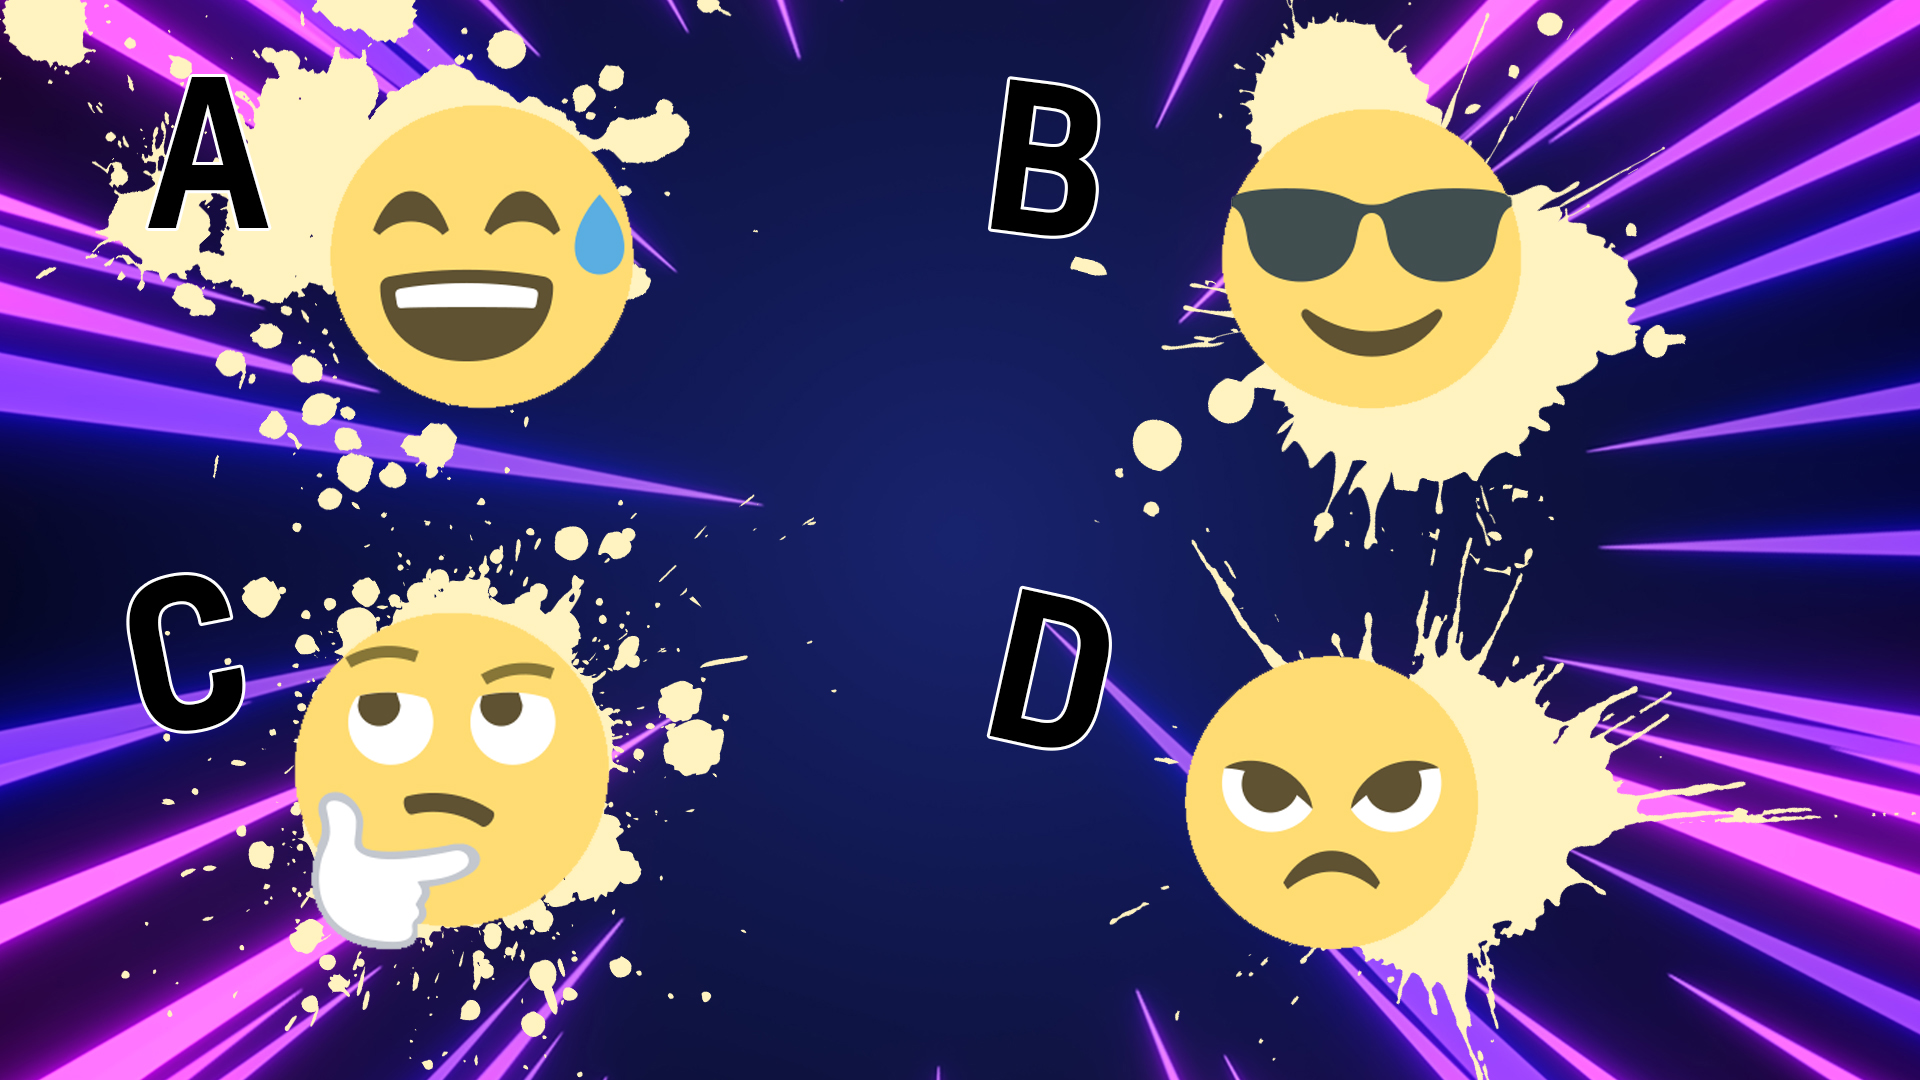 A selection of emojis: smiley face, sunglasses emoji, thinking emoji, a sad face